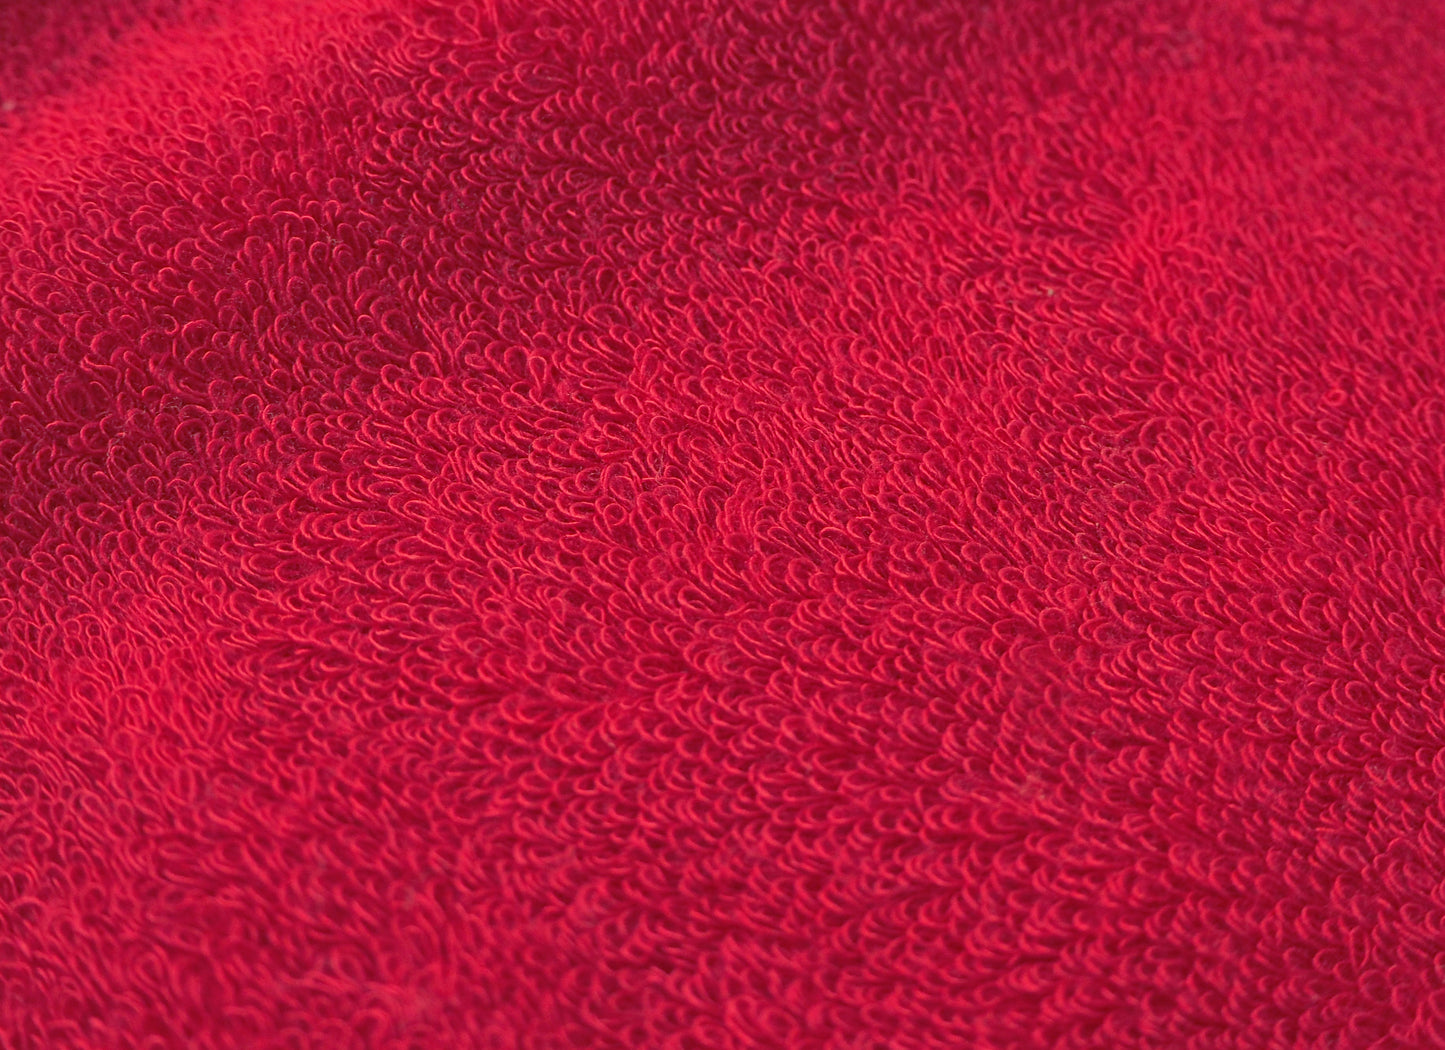 Mikketa～身に着けるタオル～カラー3色セット